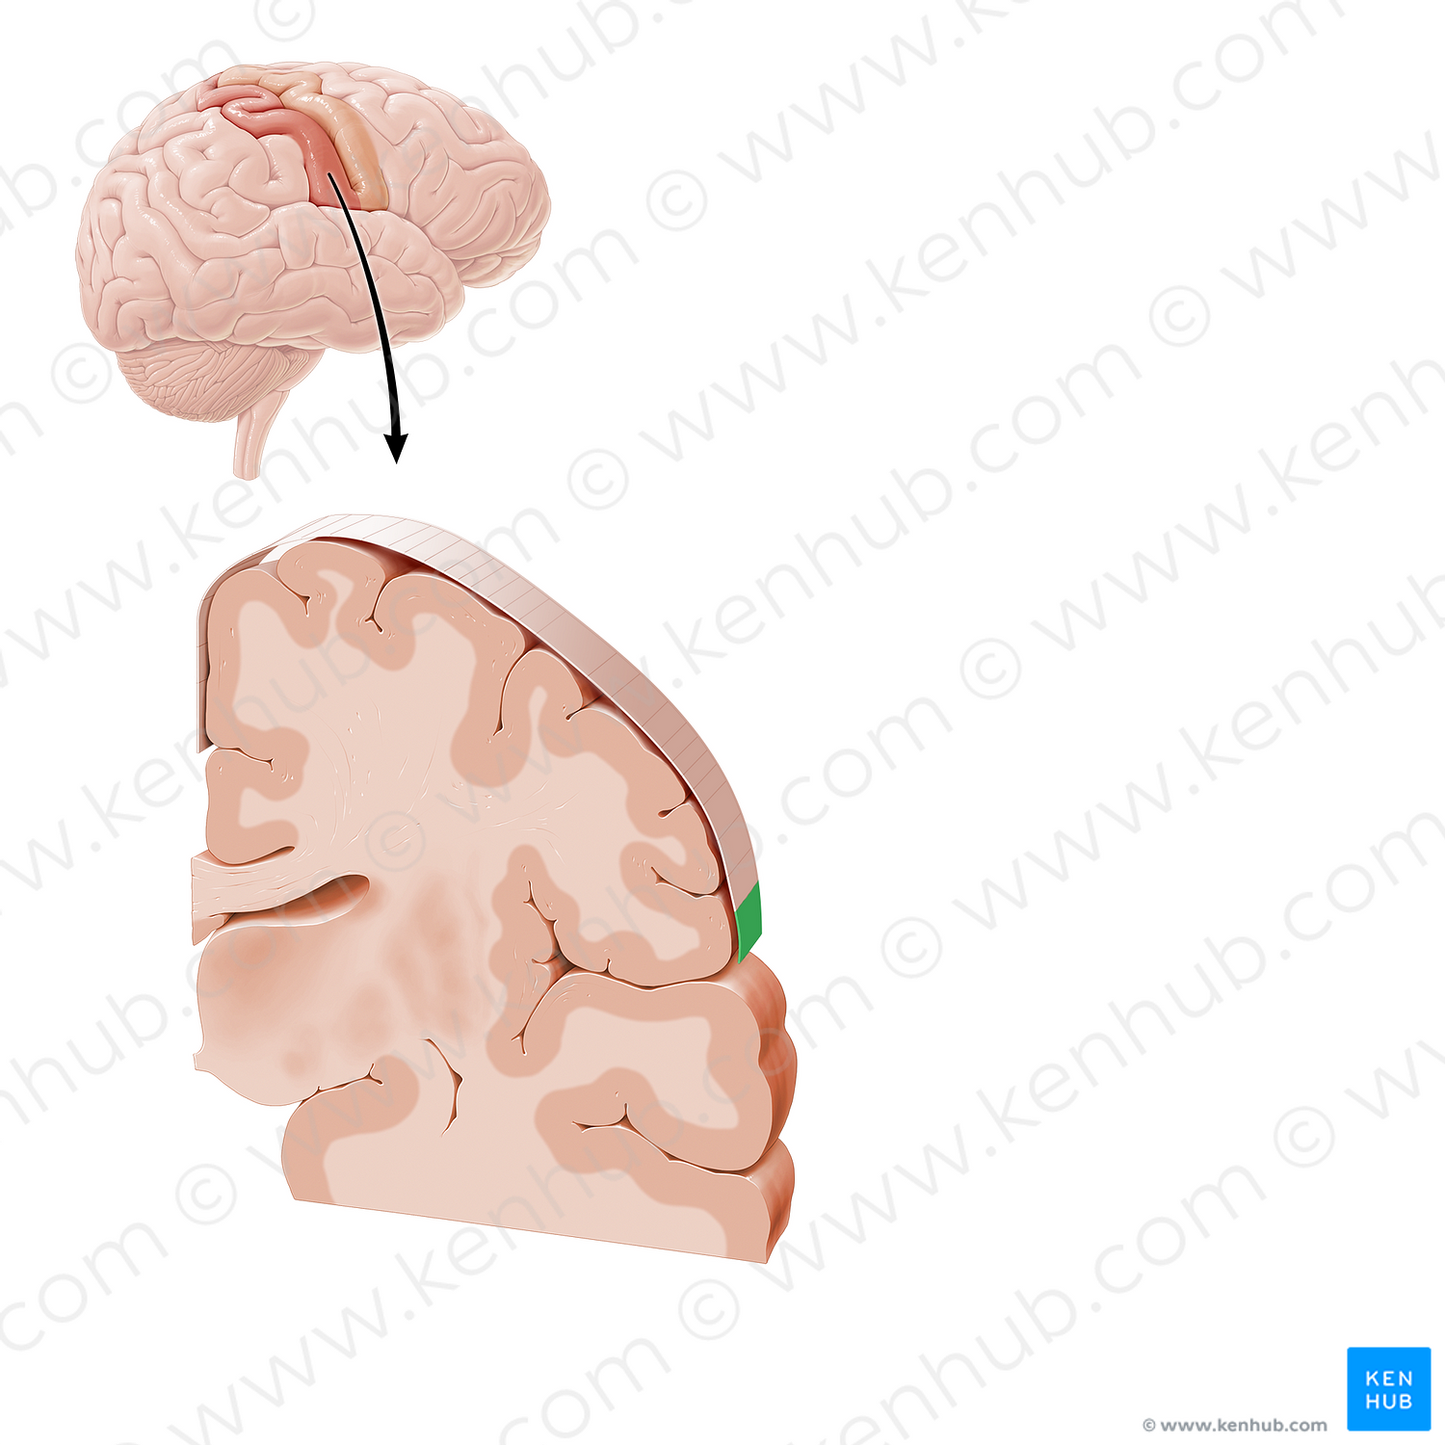 Sensory cortex of internal organs (#21222)